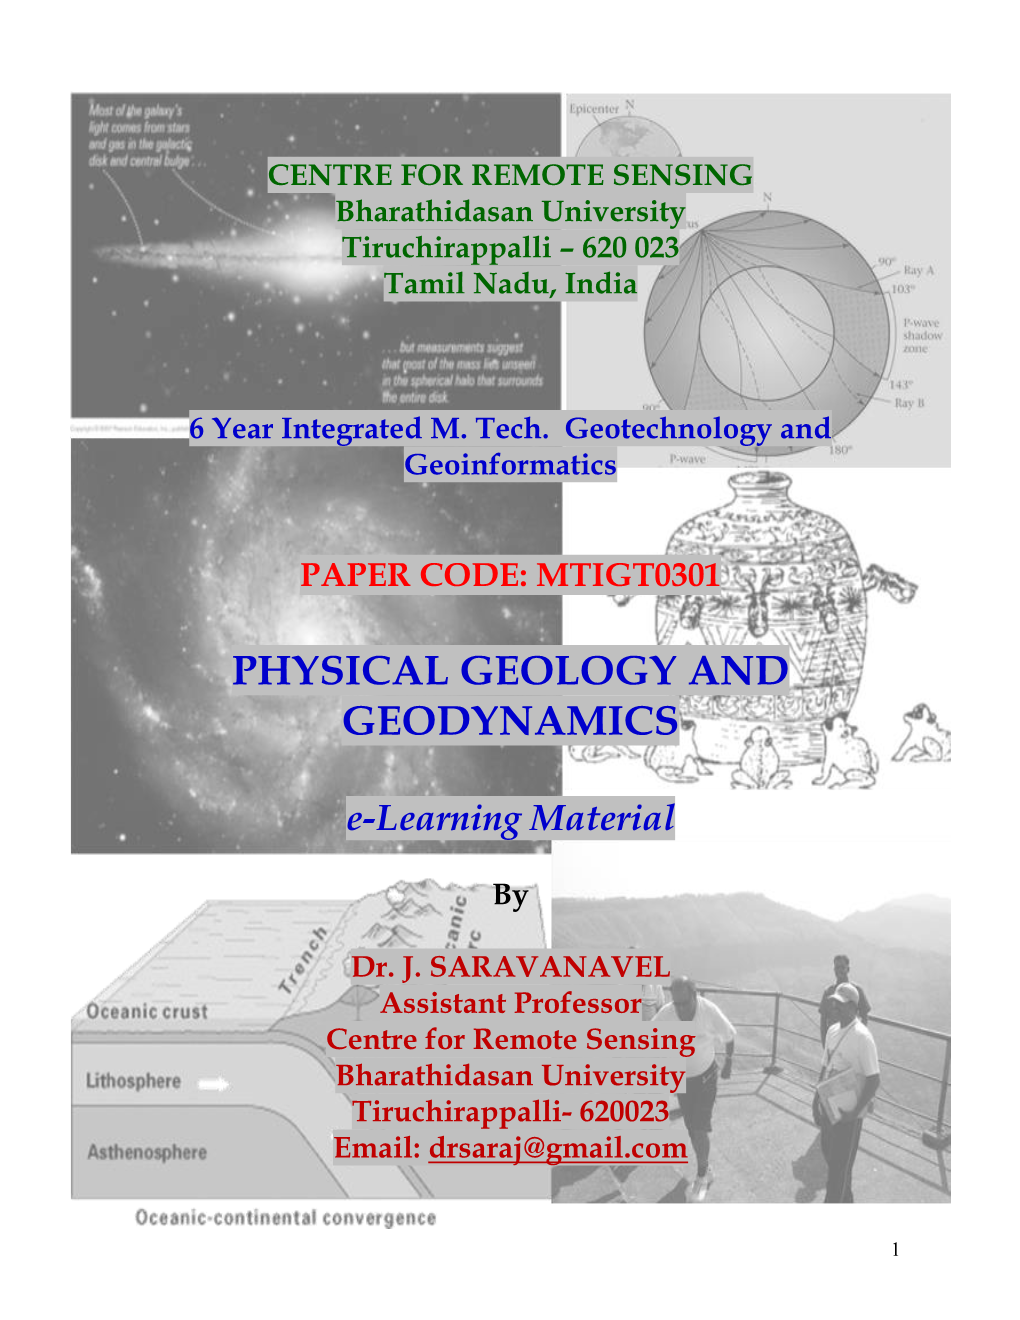 Physical Geology and Geodynamics